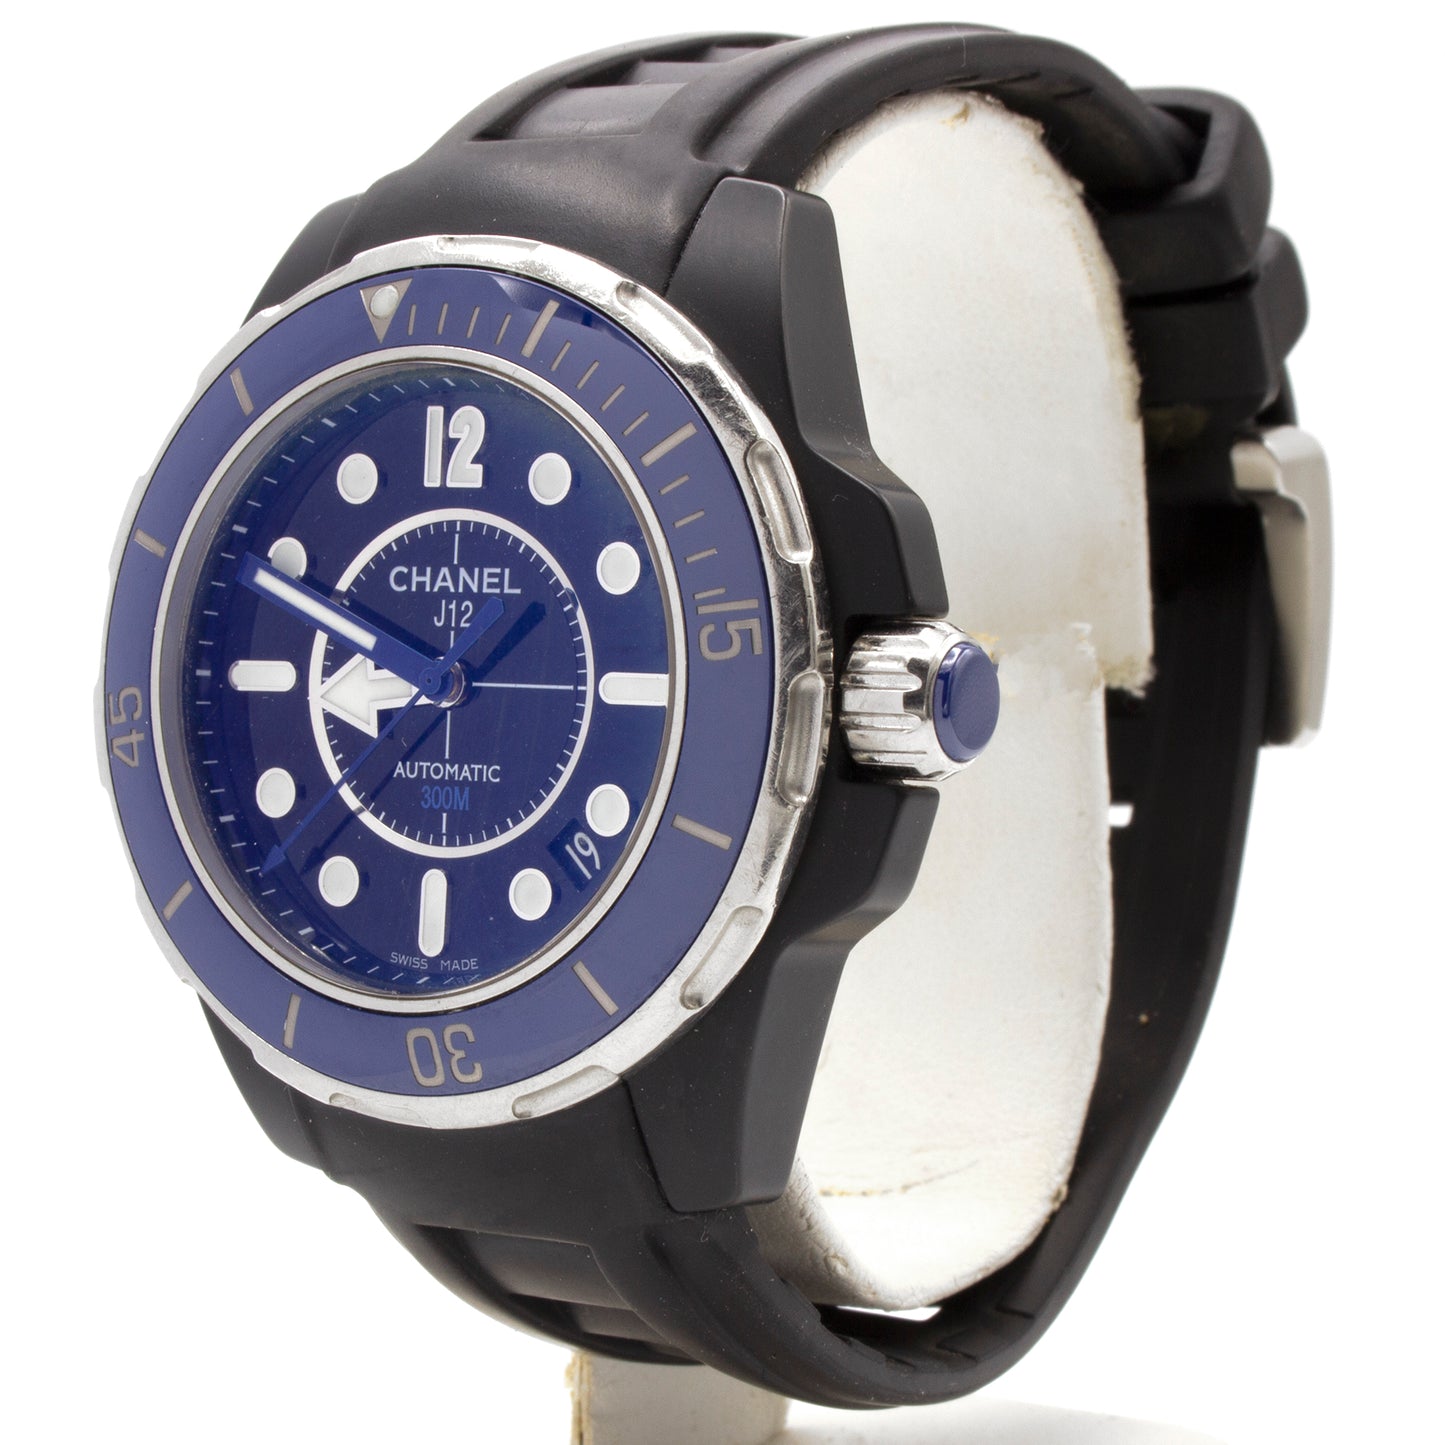 Chanel J12 Marine automatic watch